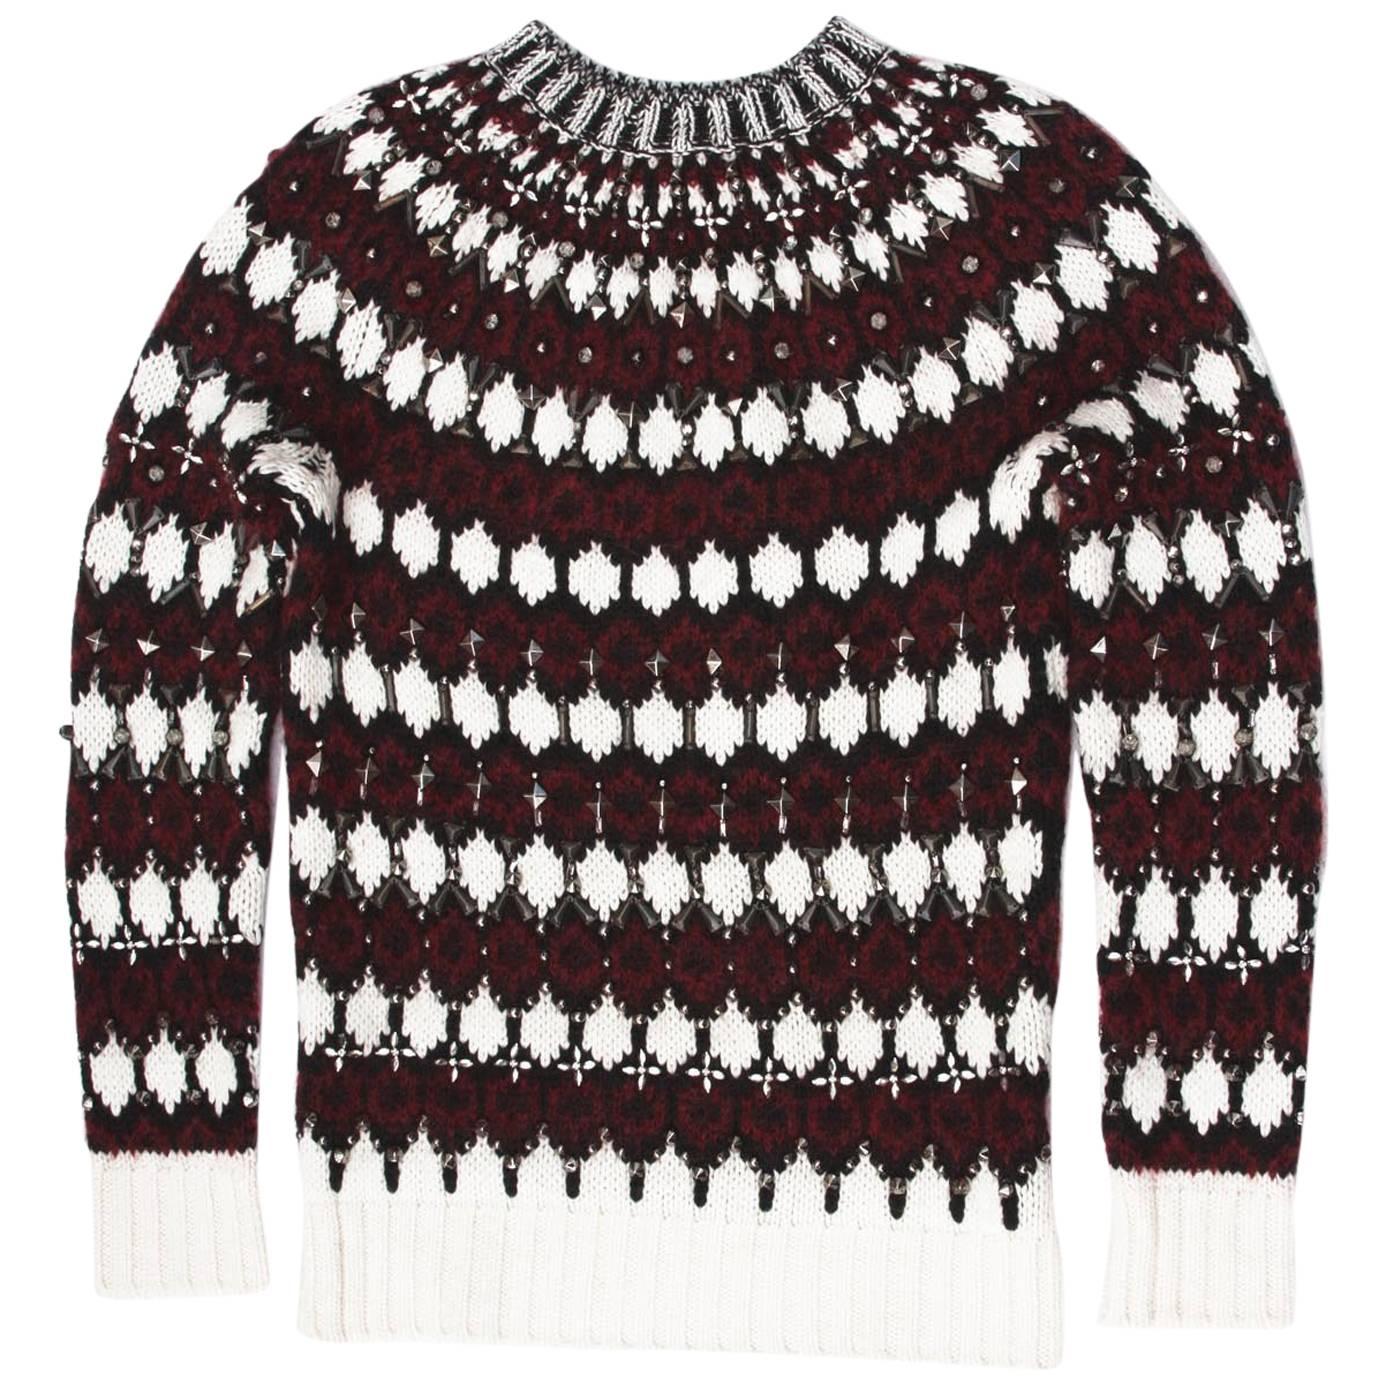 New $2100 Gucci Rich Embellished Rhinestone Metal Wool Sweater size S